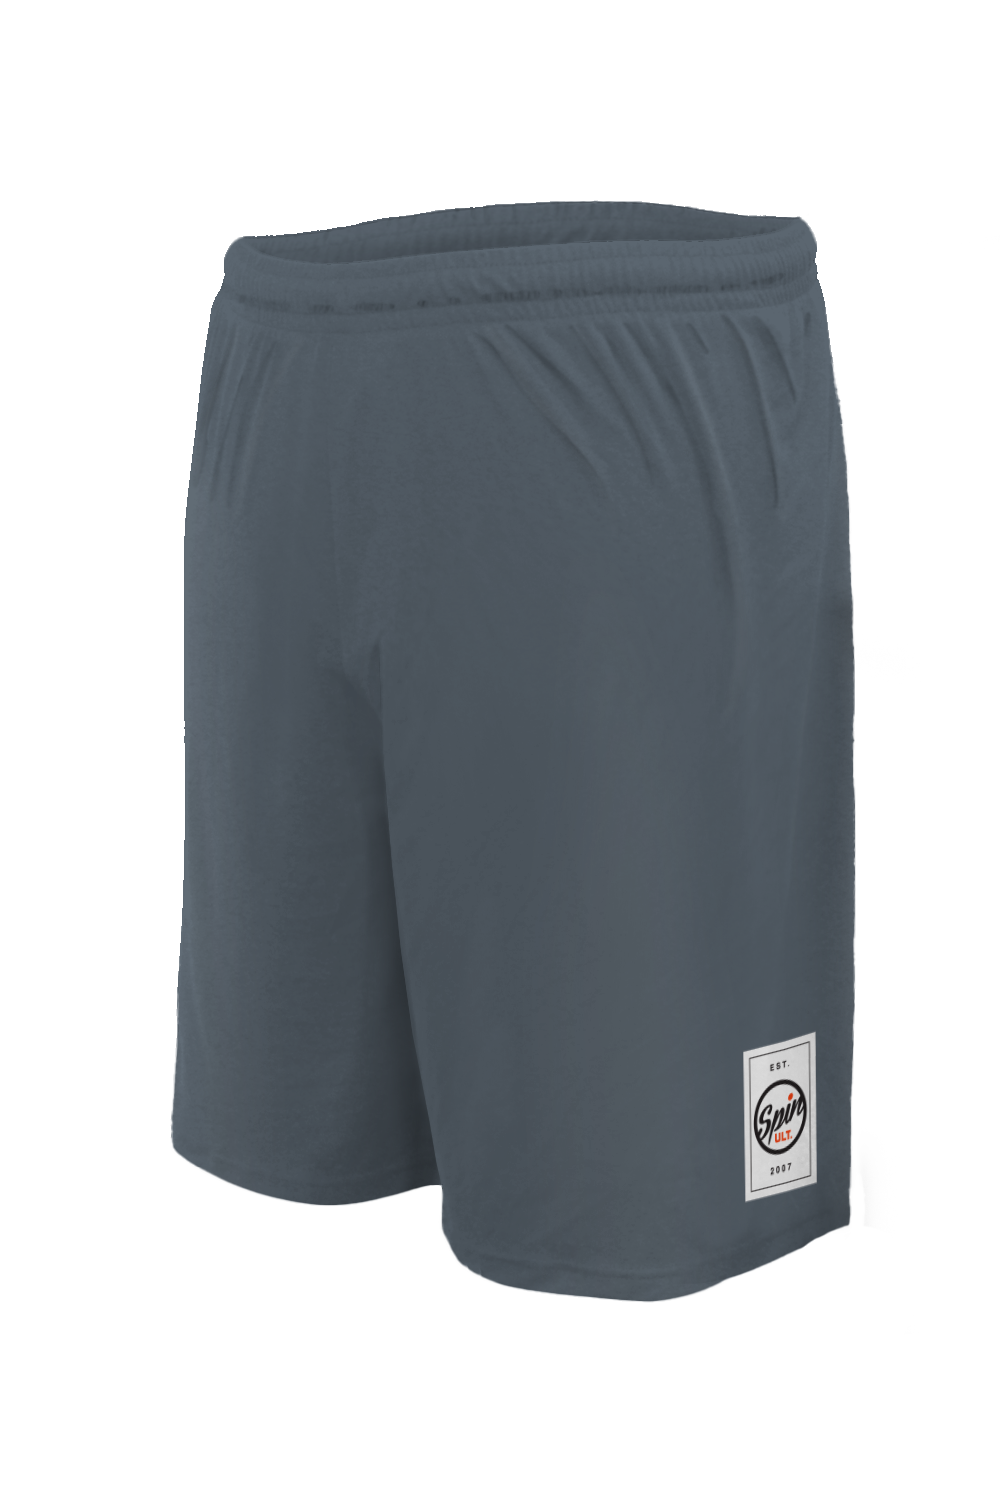 Standard Shorts (Charcoal)